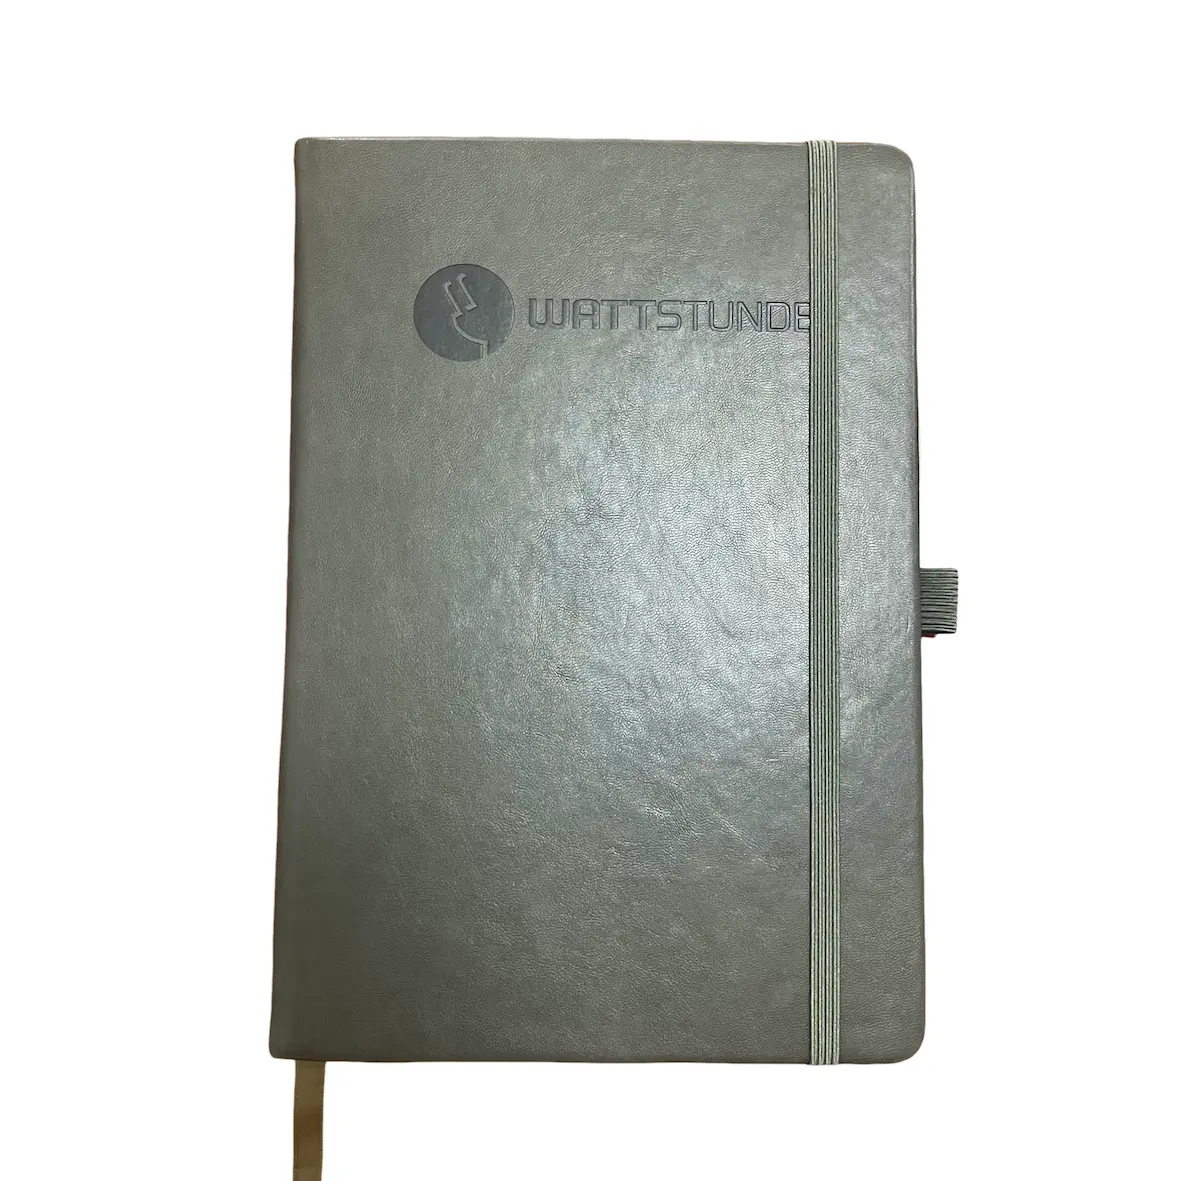 Jurnal notebook kulit PU A5 kustom dengan band elastis Buku Harian kulit kertas notebook cetak notebook dipersonalisasi